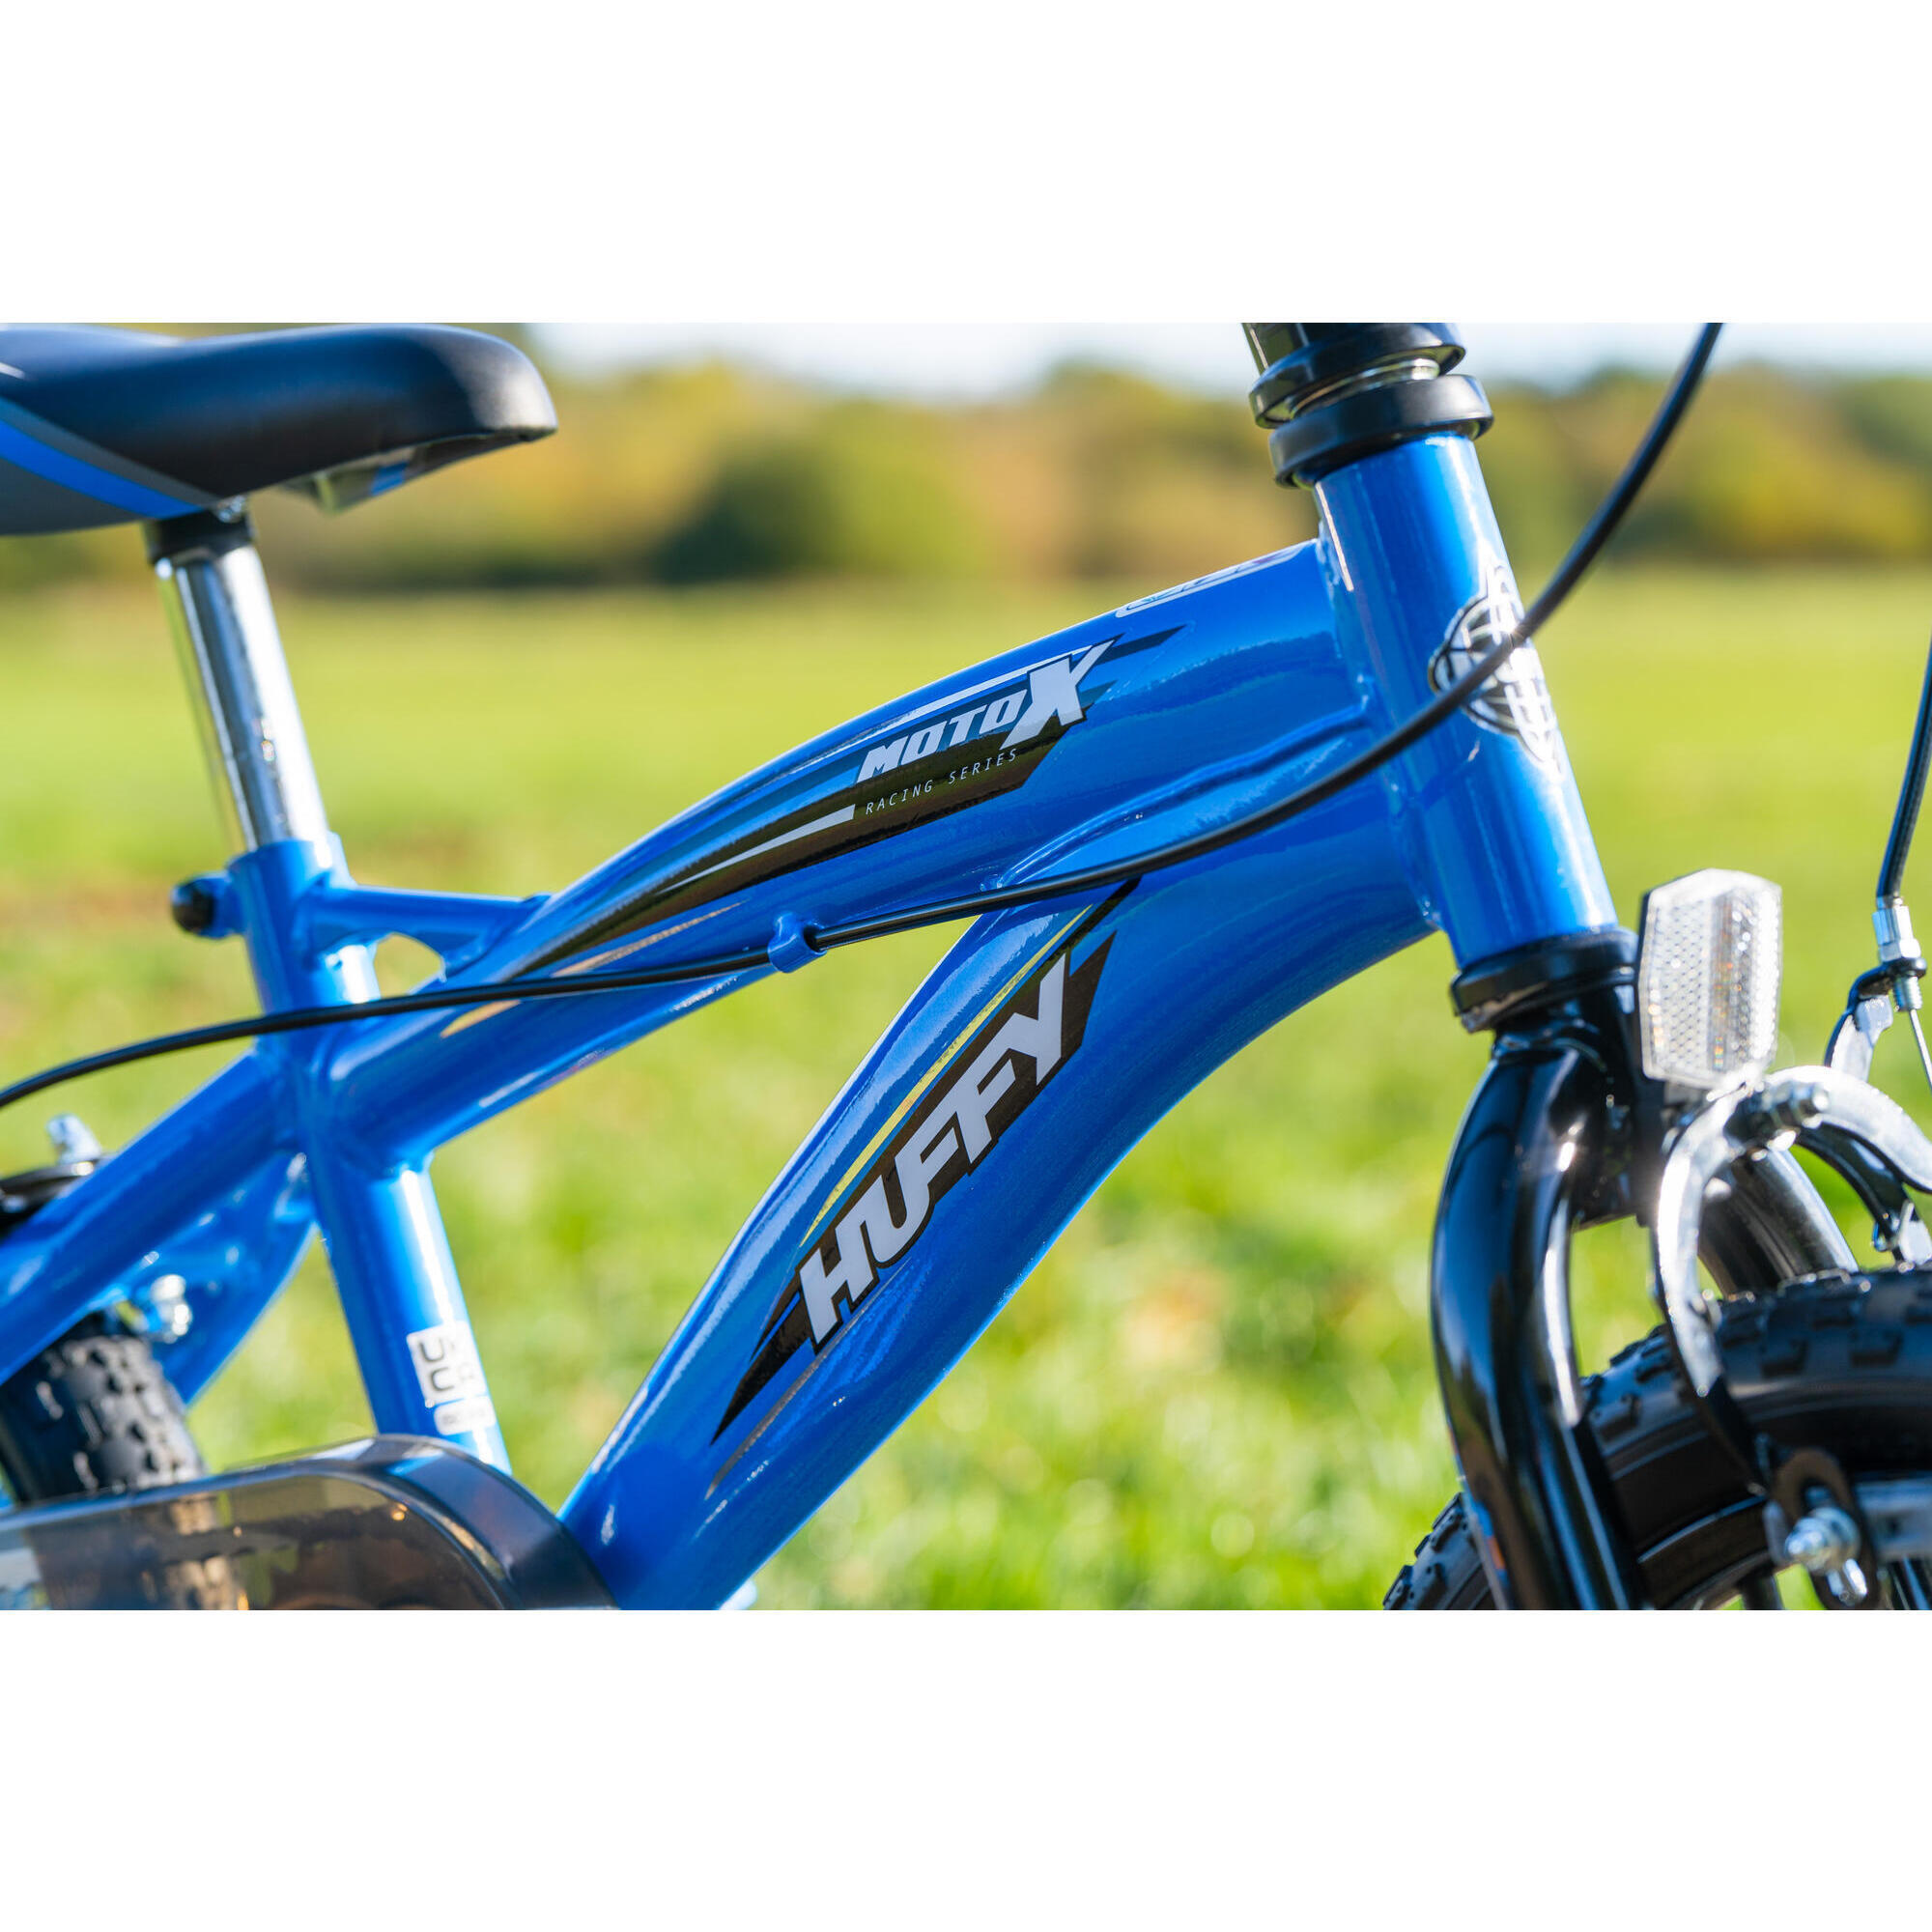 Huffy Moto X 14 Inch Boys Bike Blue Black 4-6 Year Old BMX + Stabilisers 4/7